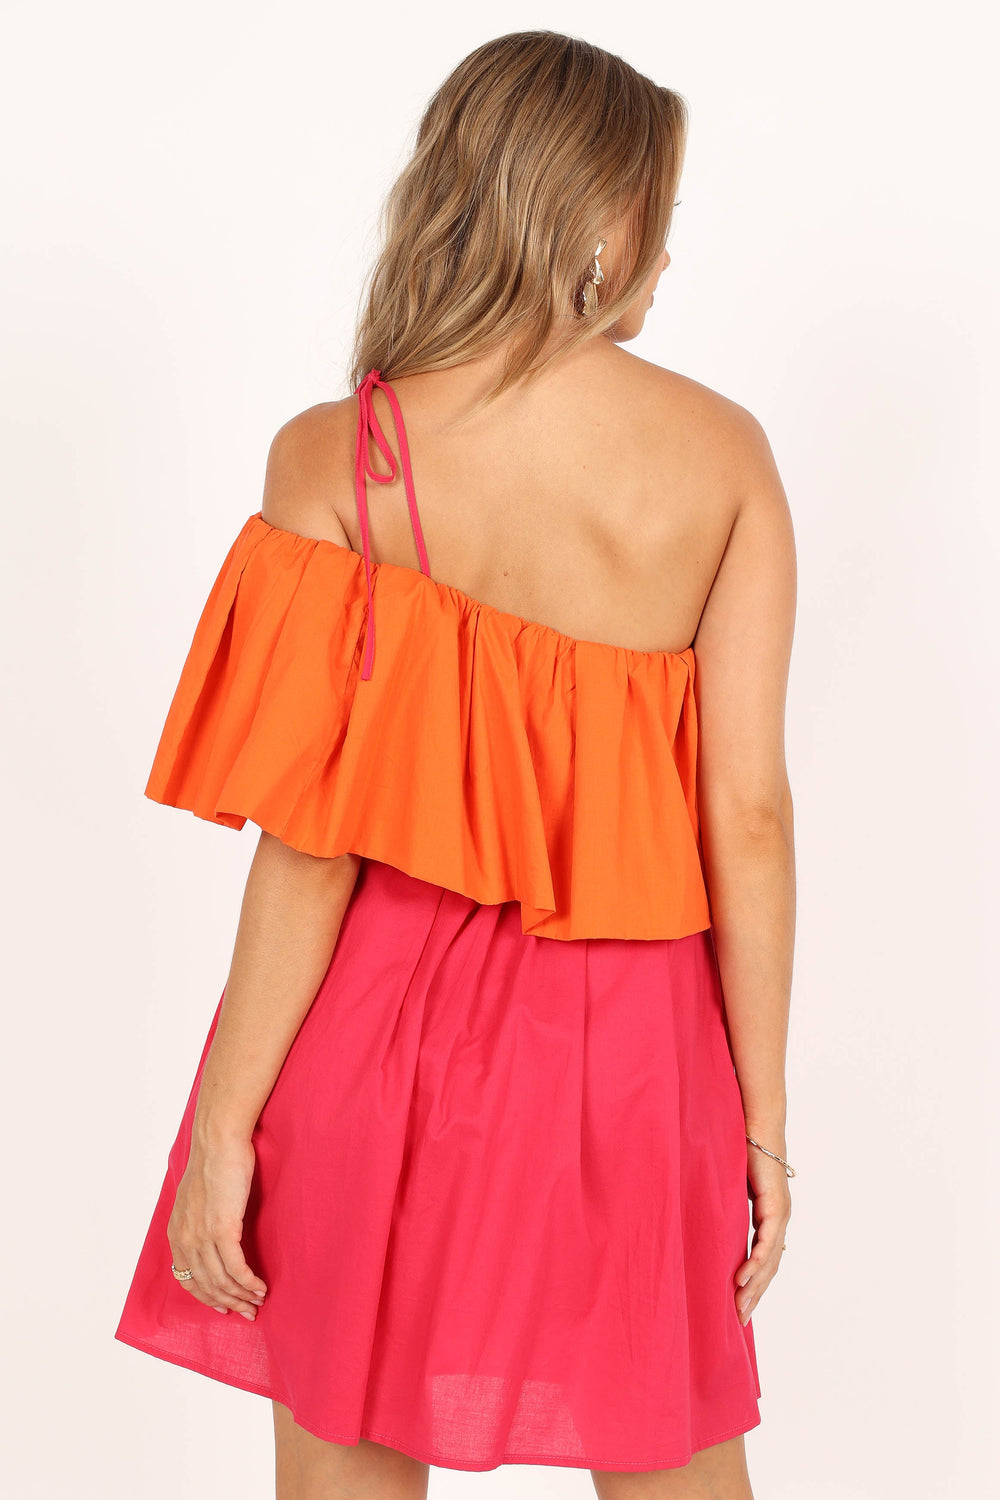 - Maeva One USA Pink/Orange Shoulder - Petal Pup Mini & Dress